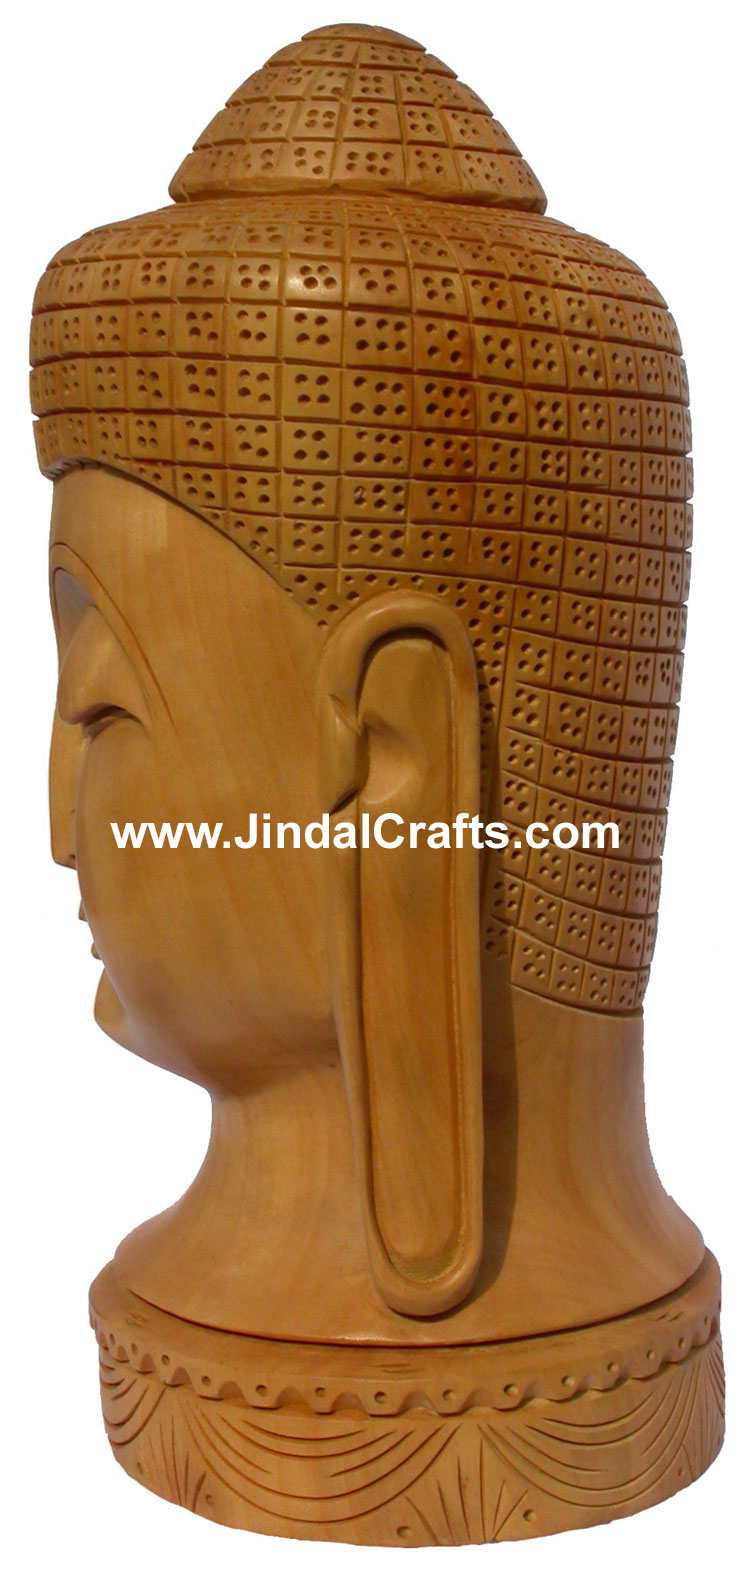 Wood Sculpture Handmade Buddha Head Figure India Art